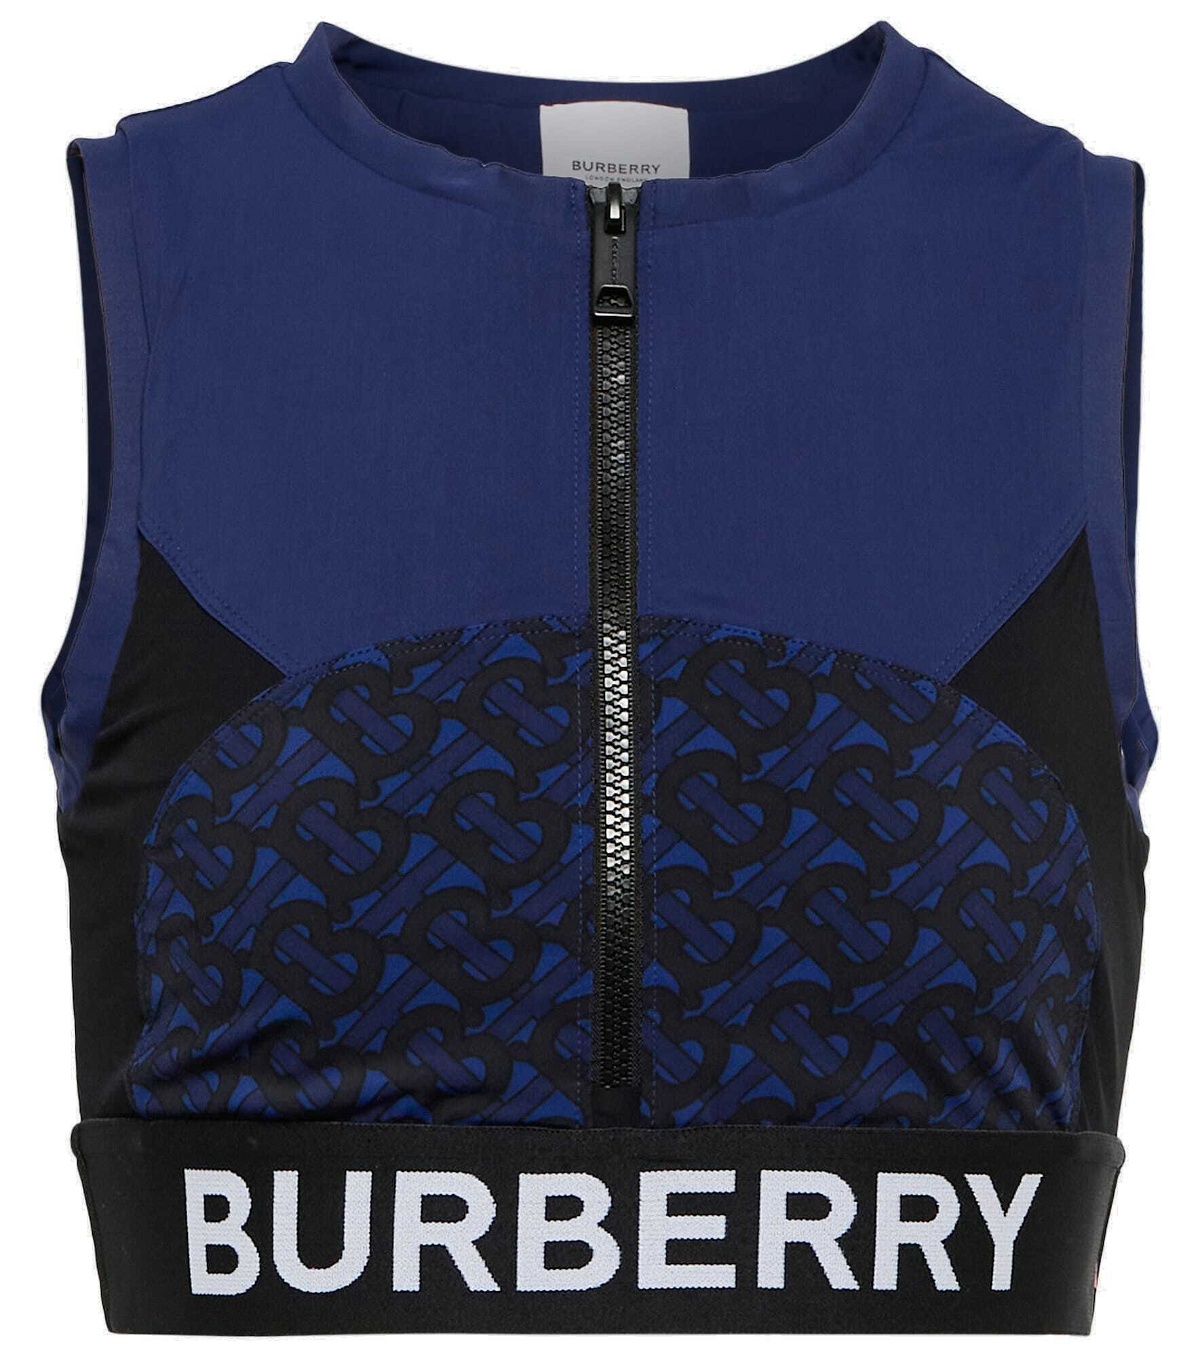 Burberry - Logo printed sports bra Burberry